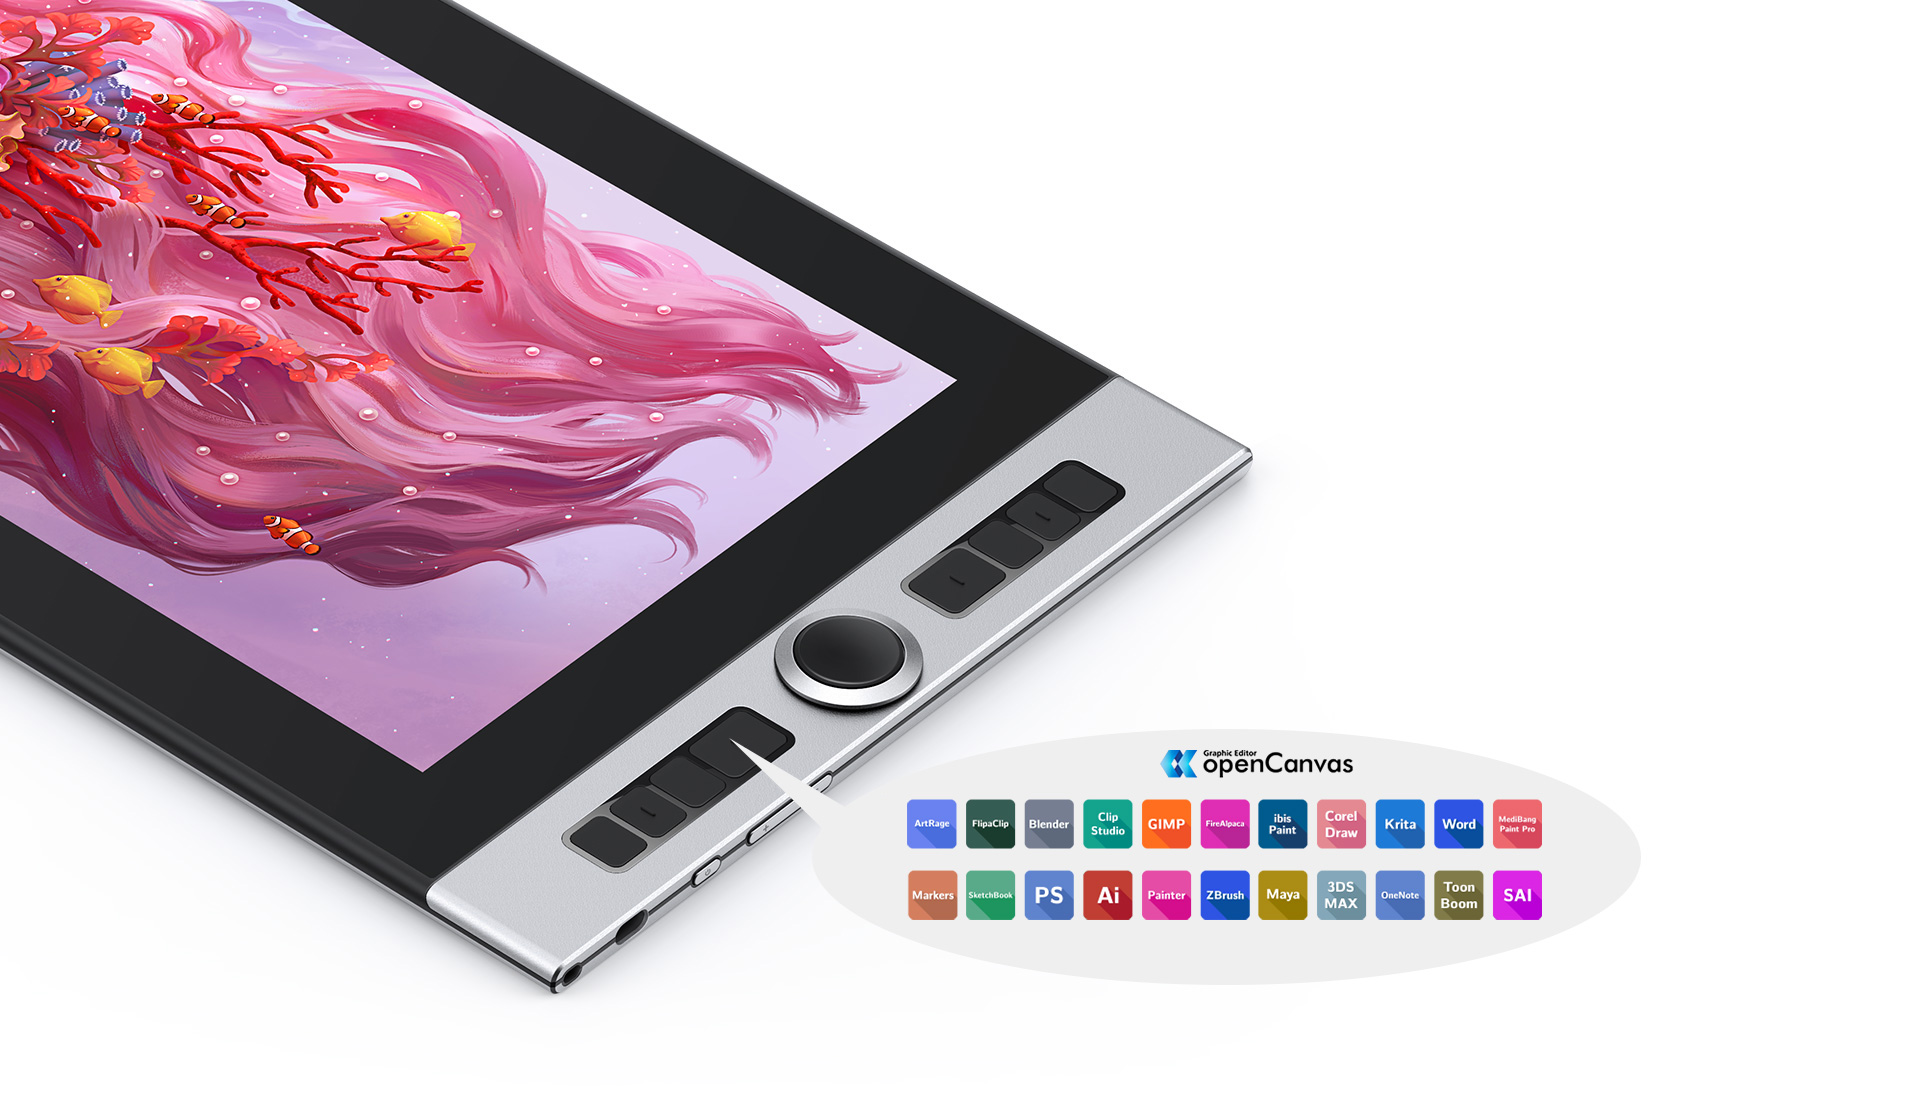 XP-Pen  Innovator 16 display monitor features 8 shortcut keys programmed